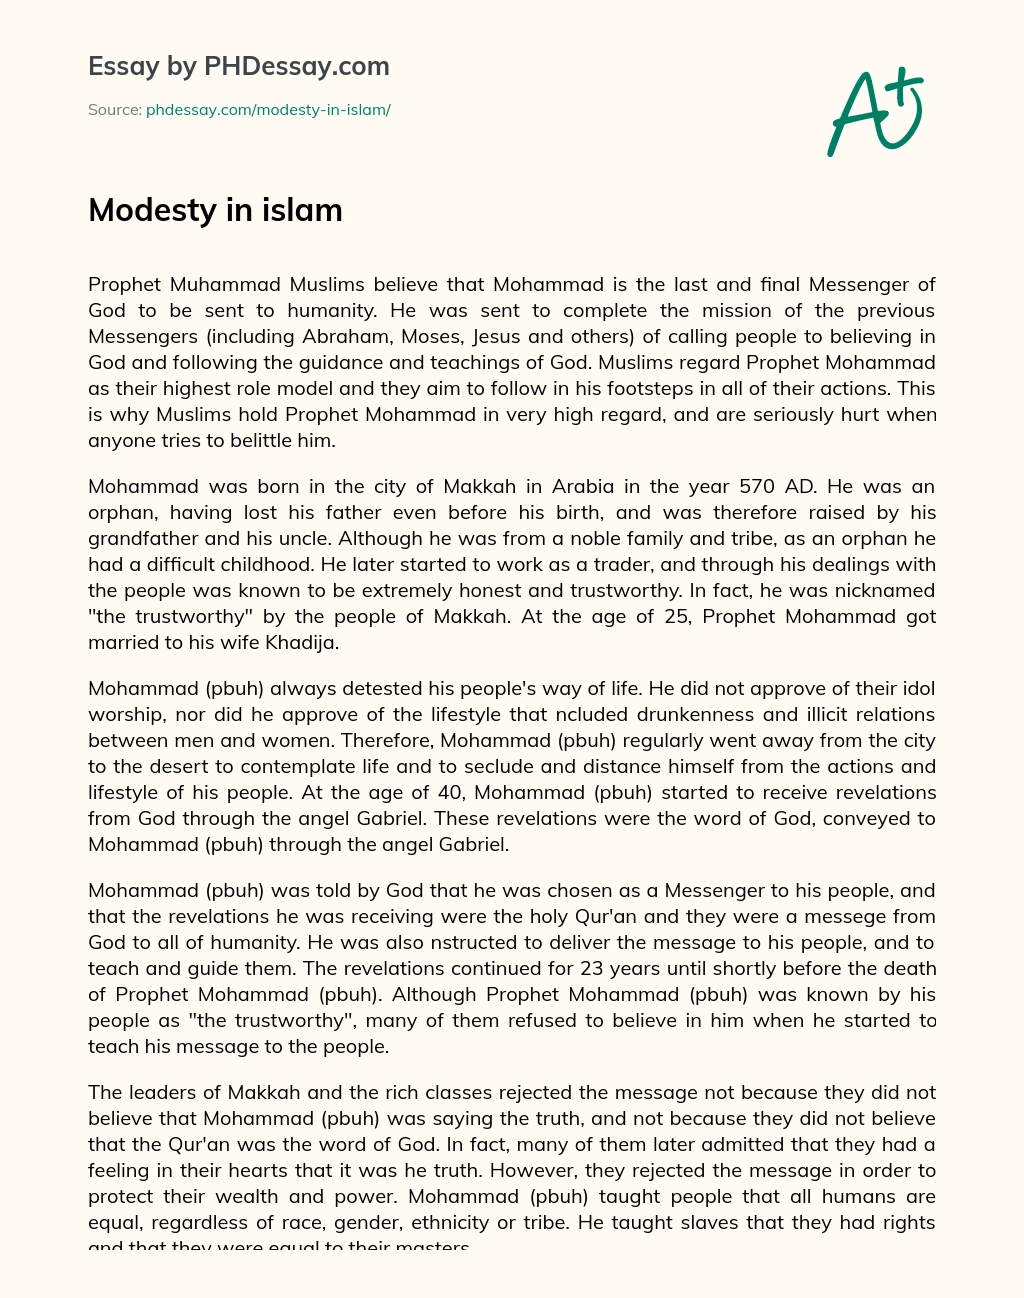 Modesty in islam essay